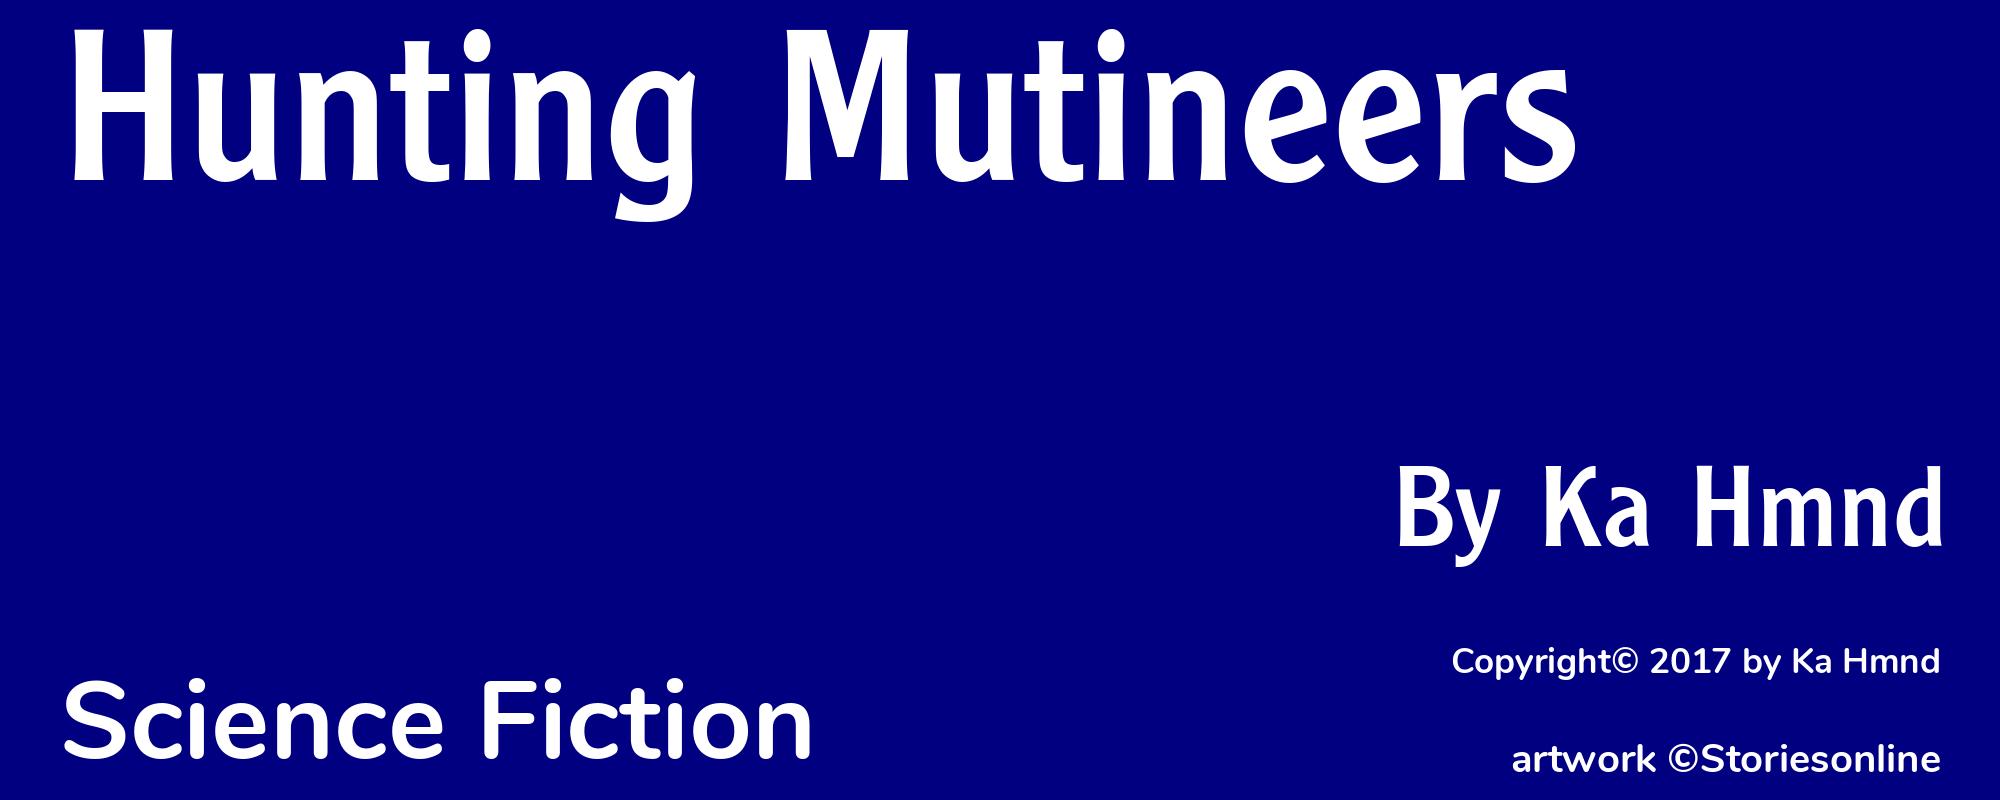 Hunting Mutineers - Cover